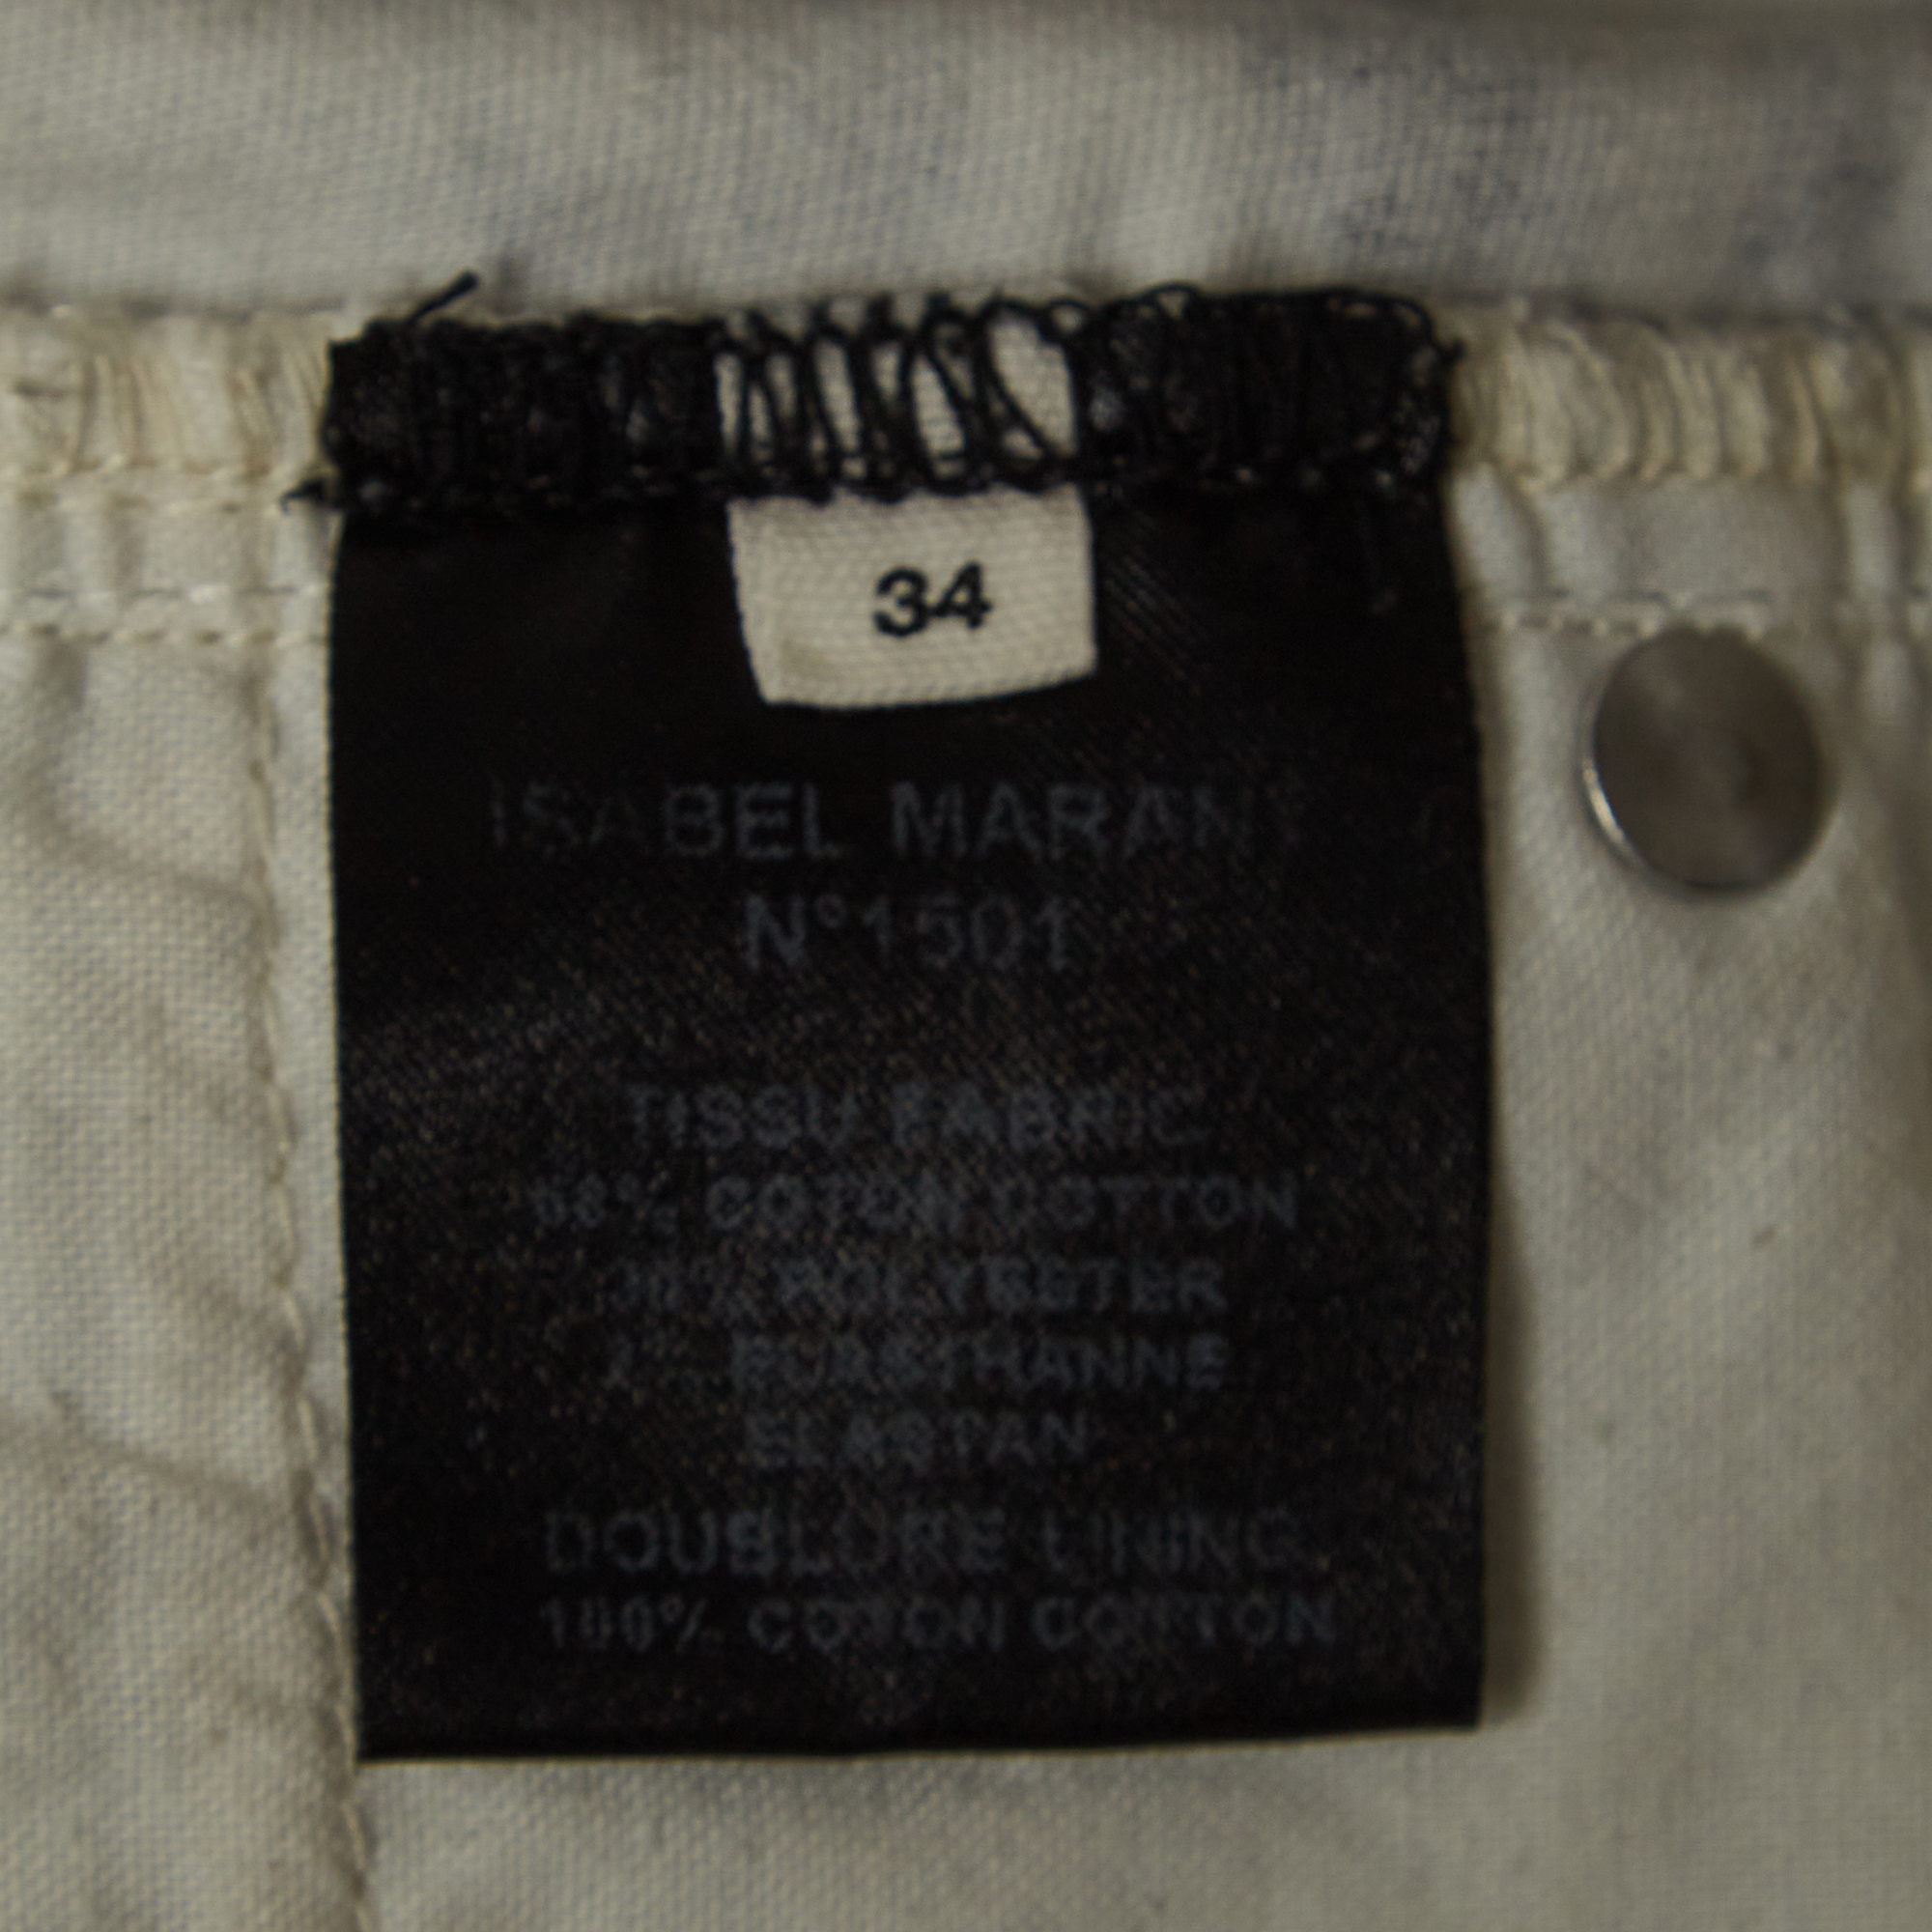 Isabel Marant Etoile Beige Printed Cotton Blend Slim Fit Jeans S Waist 26